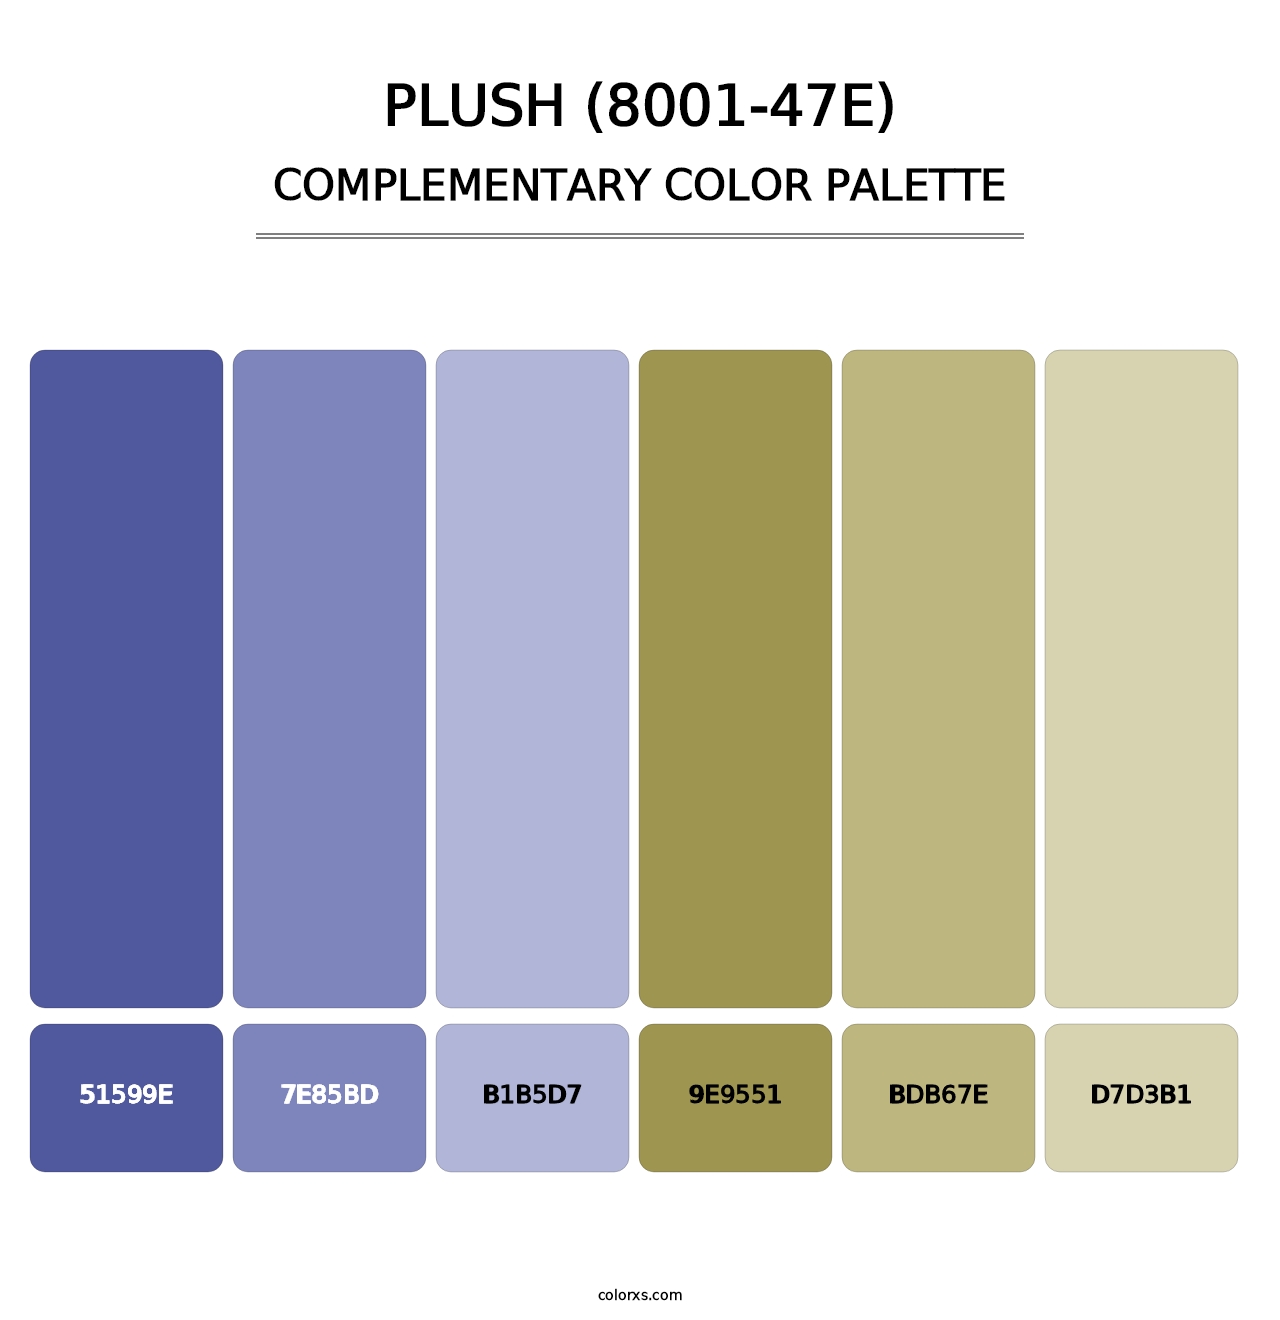 Plush (8001-47E) - Complementary Color Palette